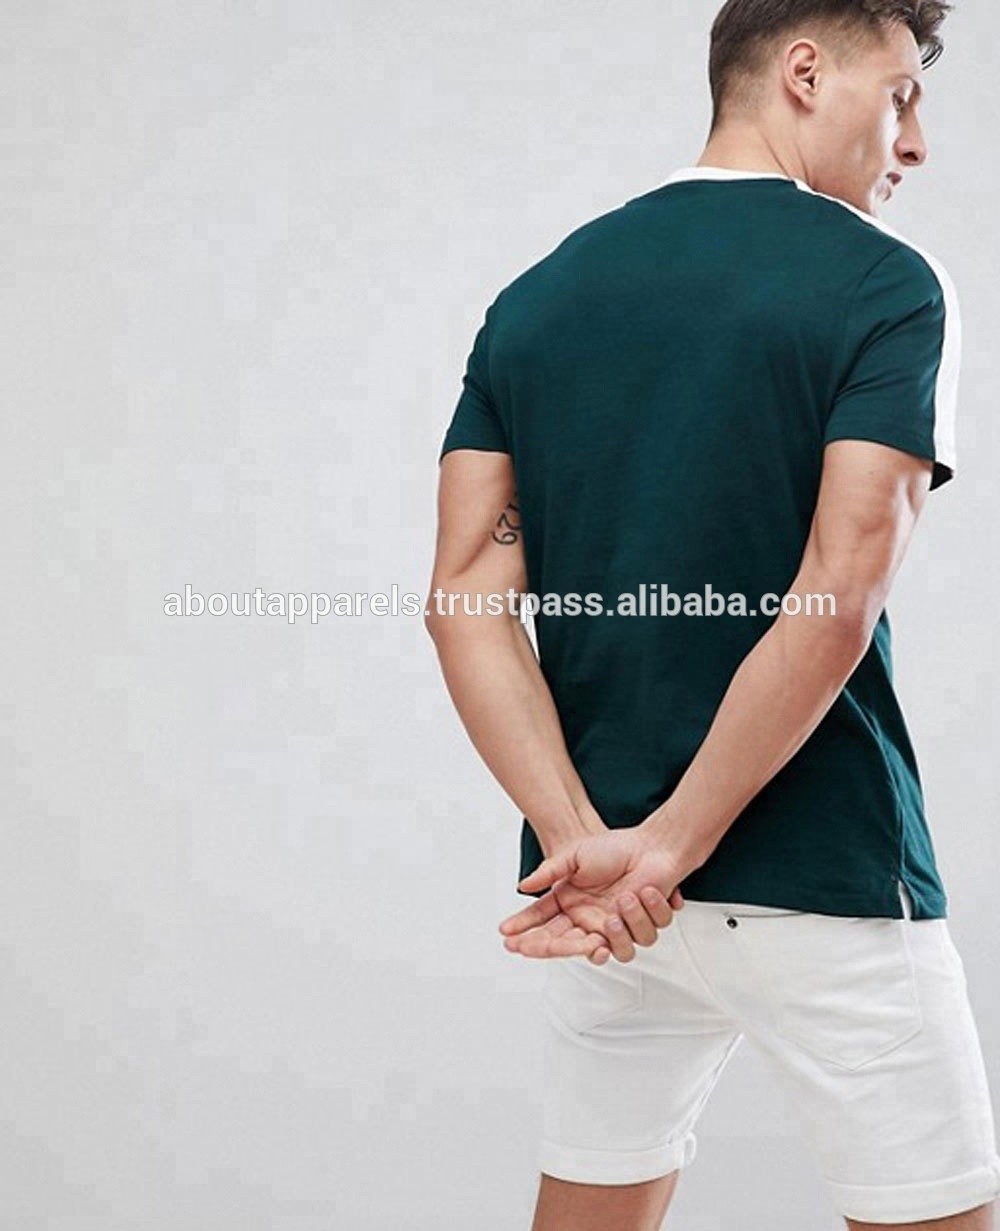 Custom Design Plain Cheap T Shirt For Man,New Look Ringer With Sleeve Stripe In Green T Shirt